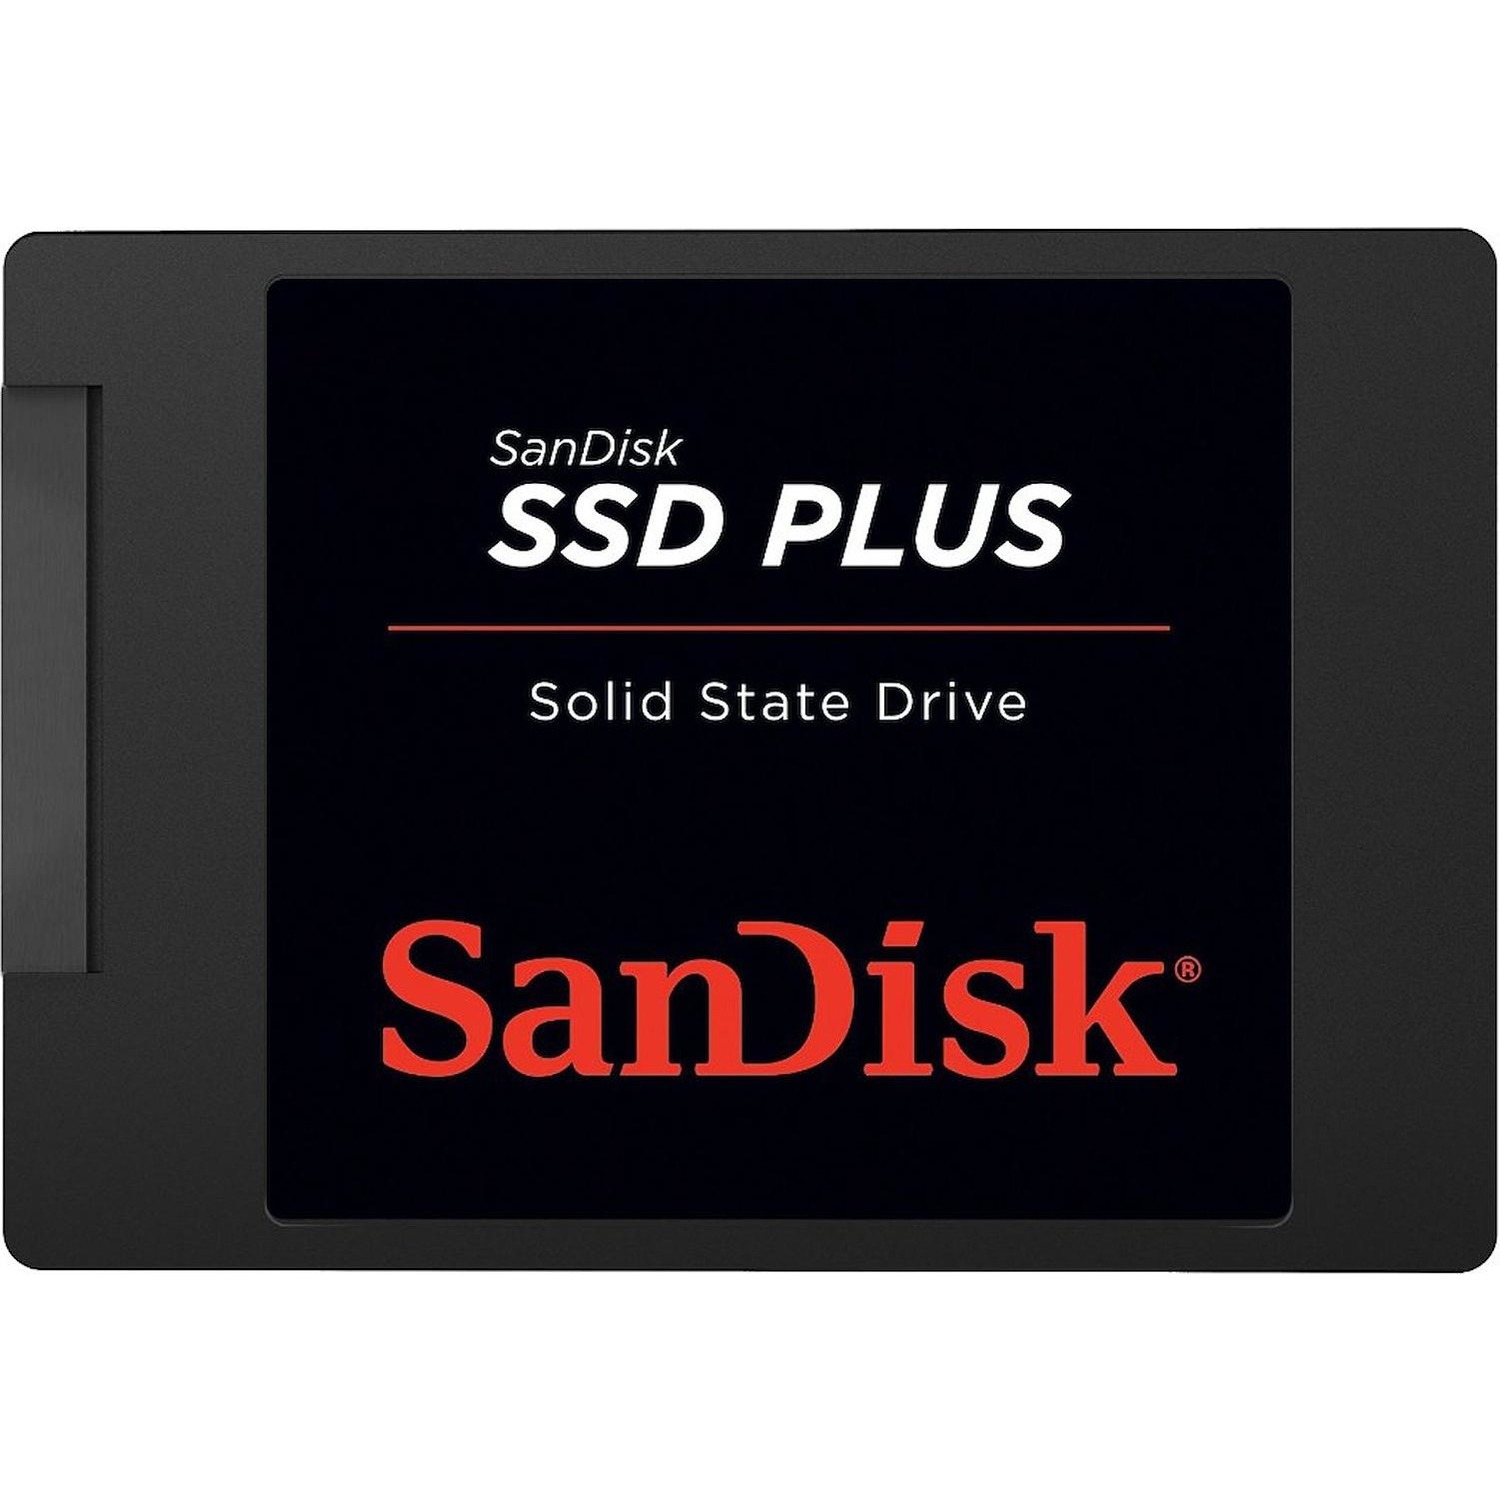 Immagine per HD SSD Sandisk 480GB plus da DIMOStore